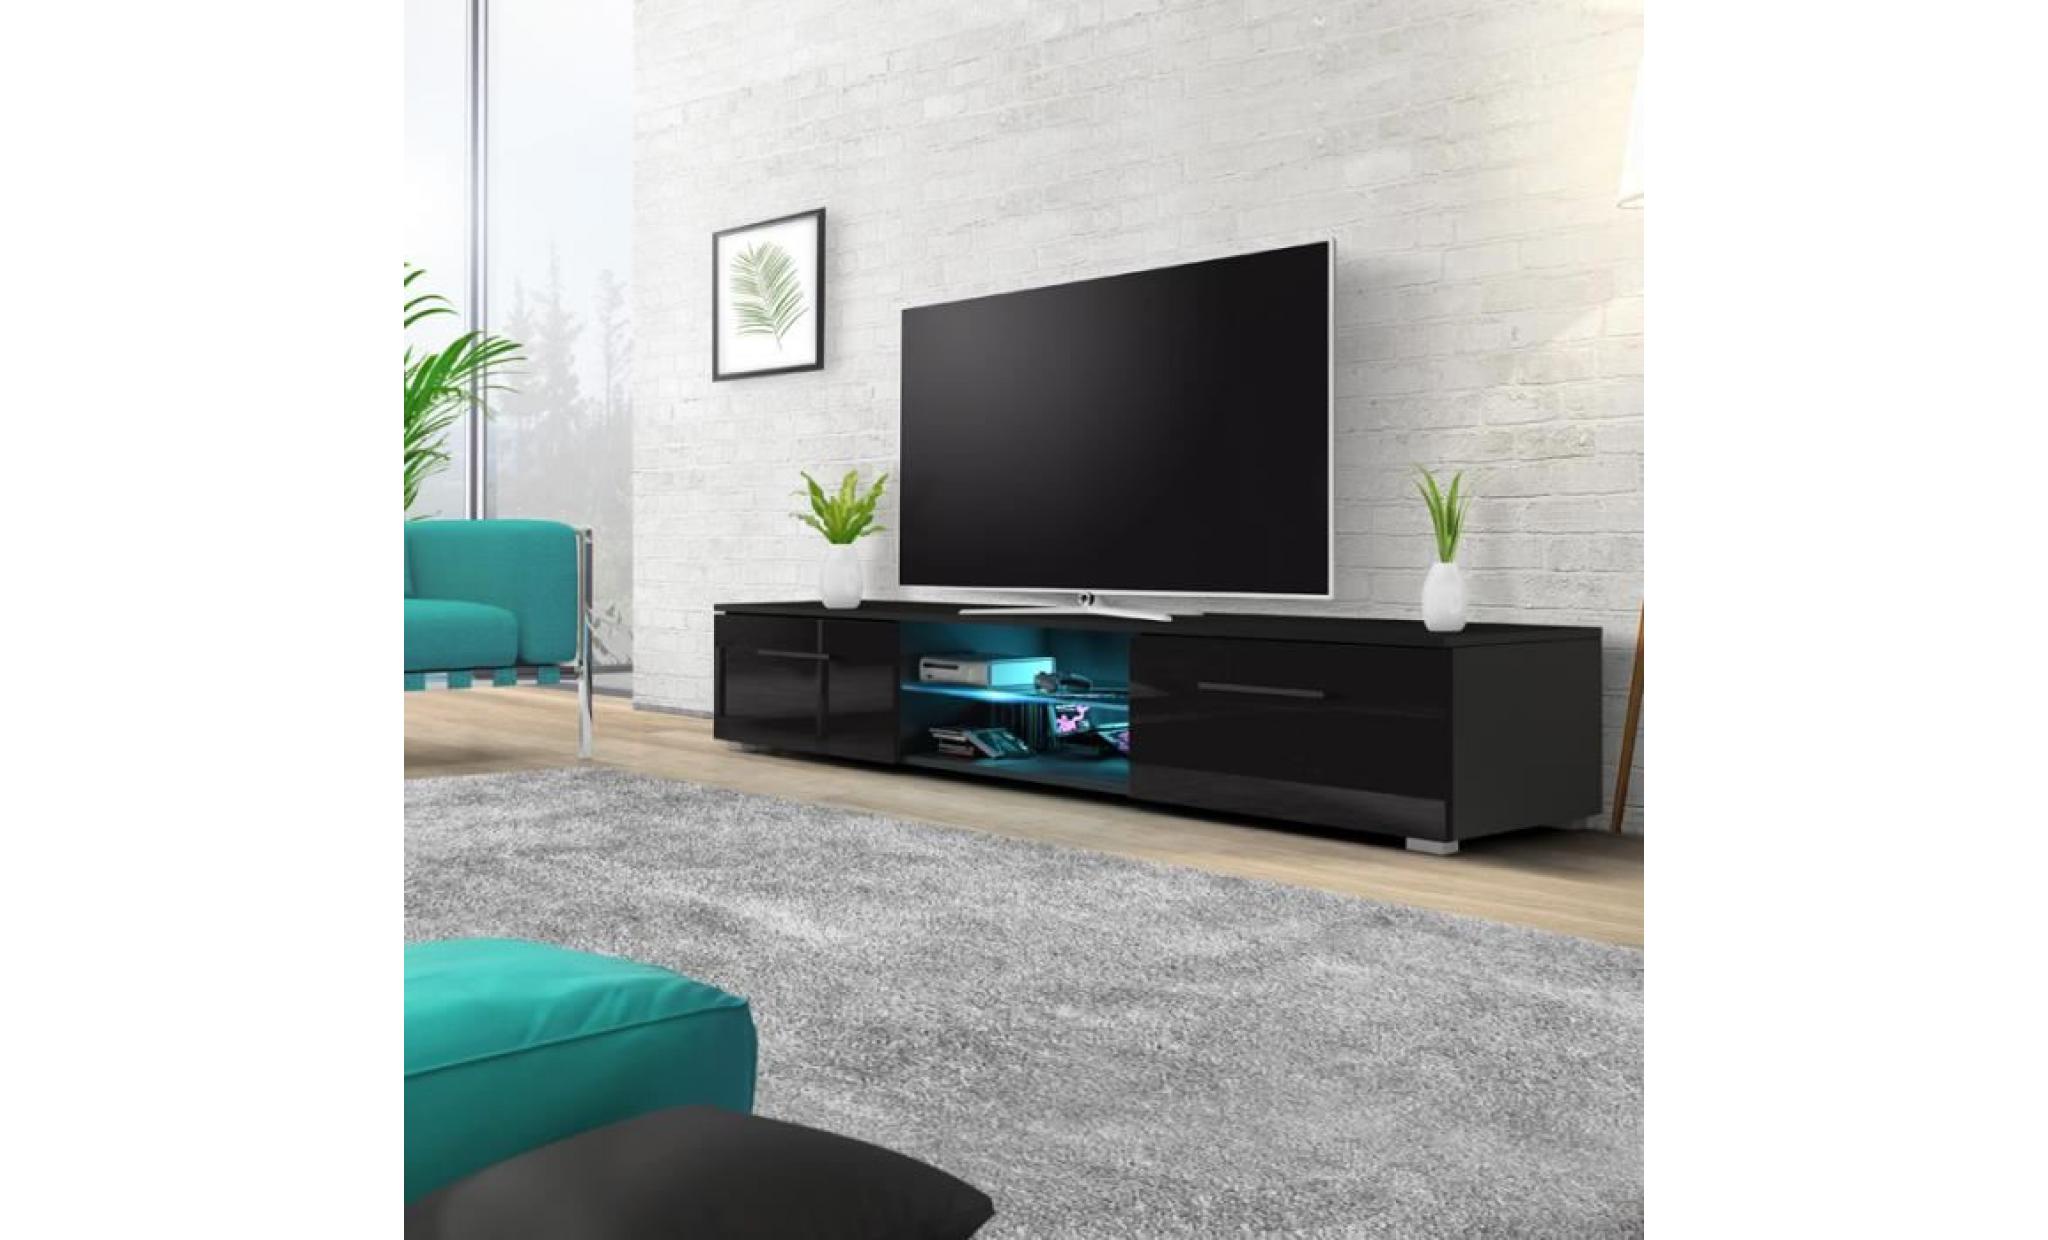 meuble tv / meuble salon   edith   140 cm   noir mat / noir brillant   avec led bleue   style minimaliste   style moderne